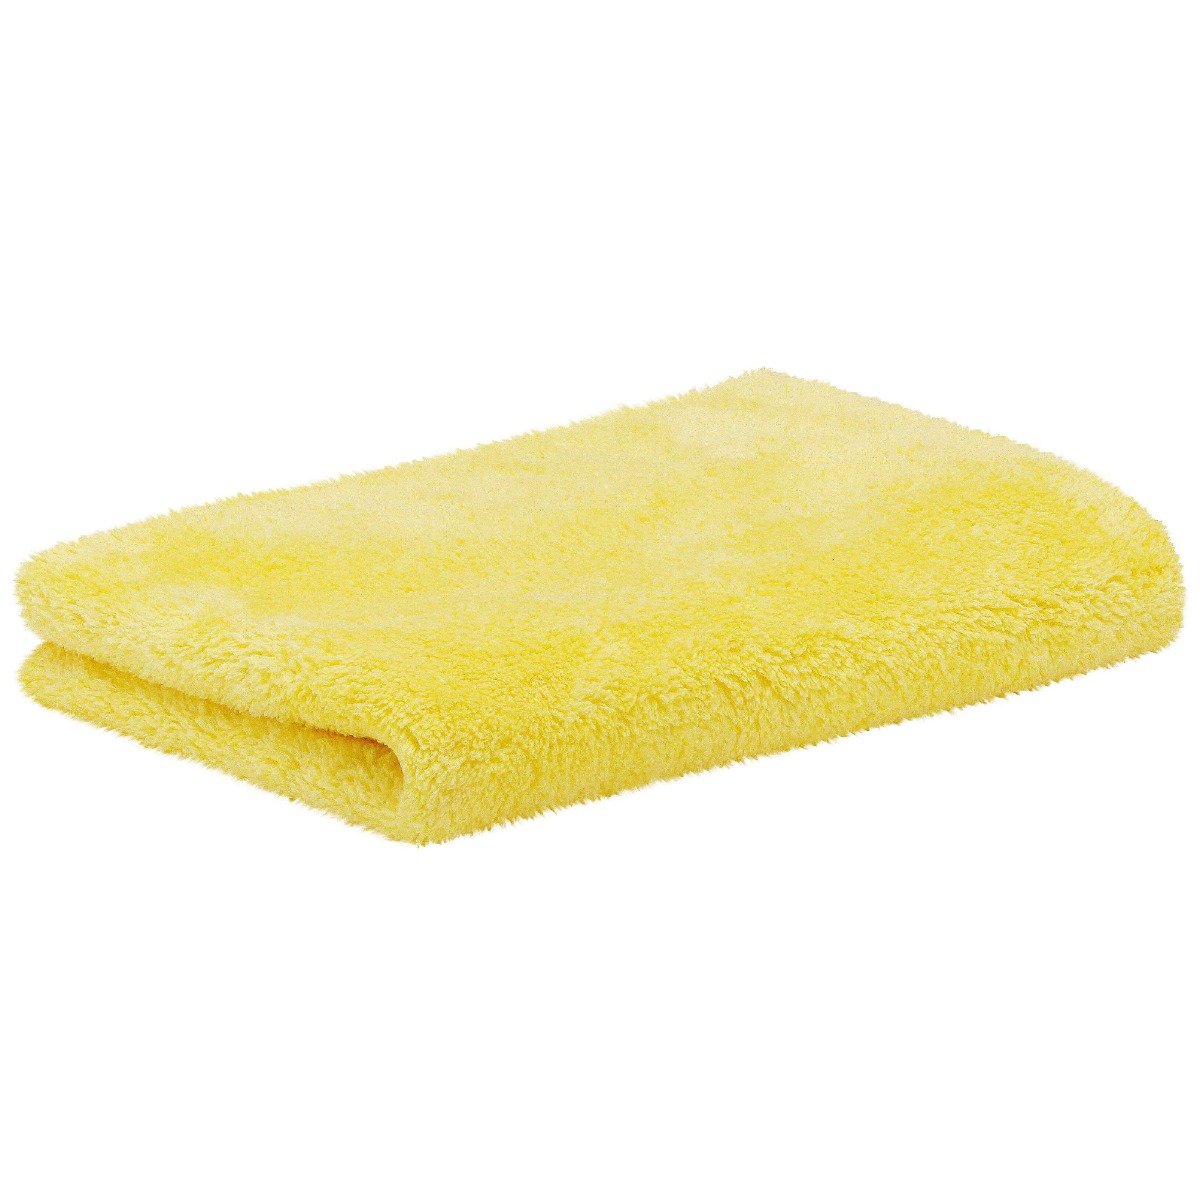 Polishing Towel Citrus Deluxe  - 60x40cm